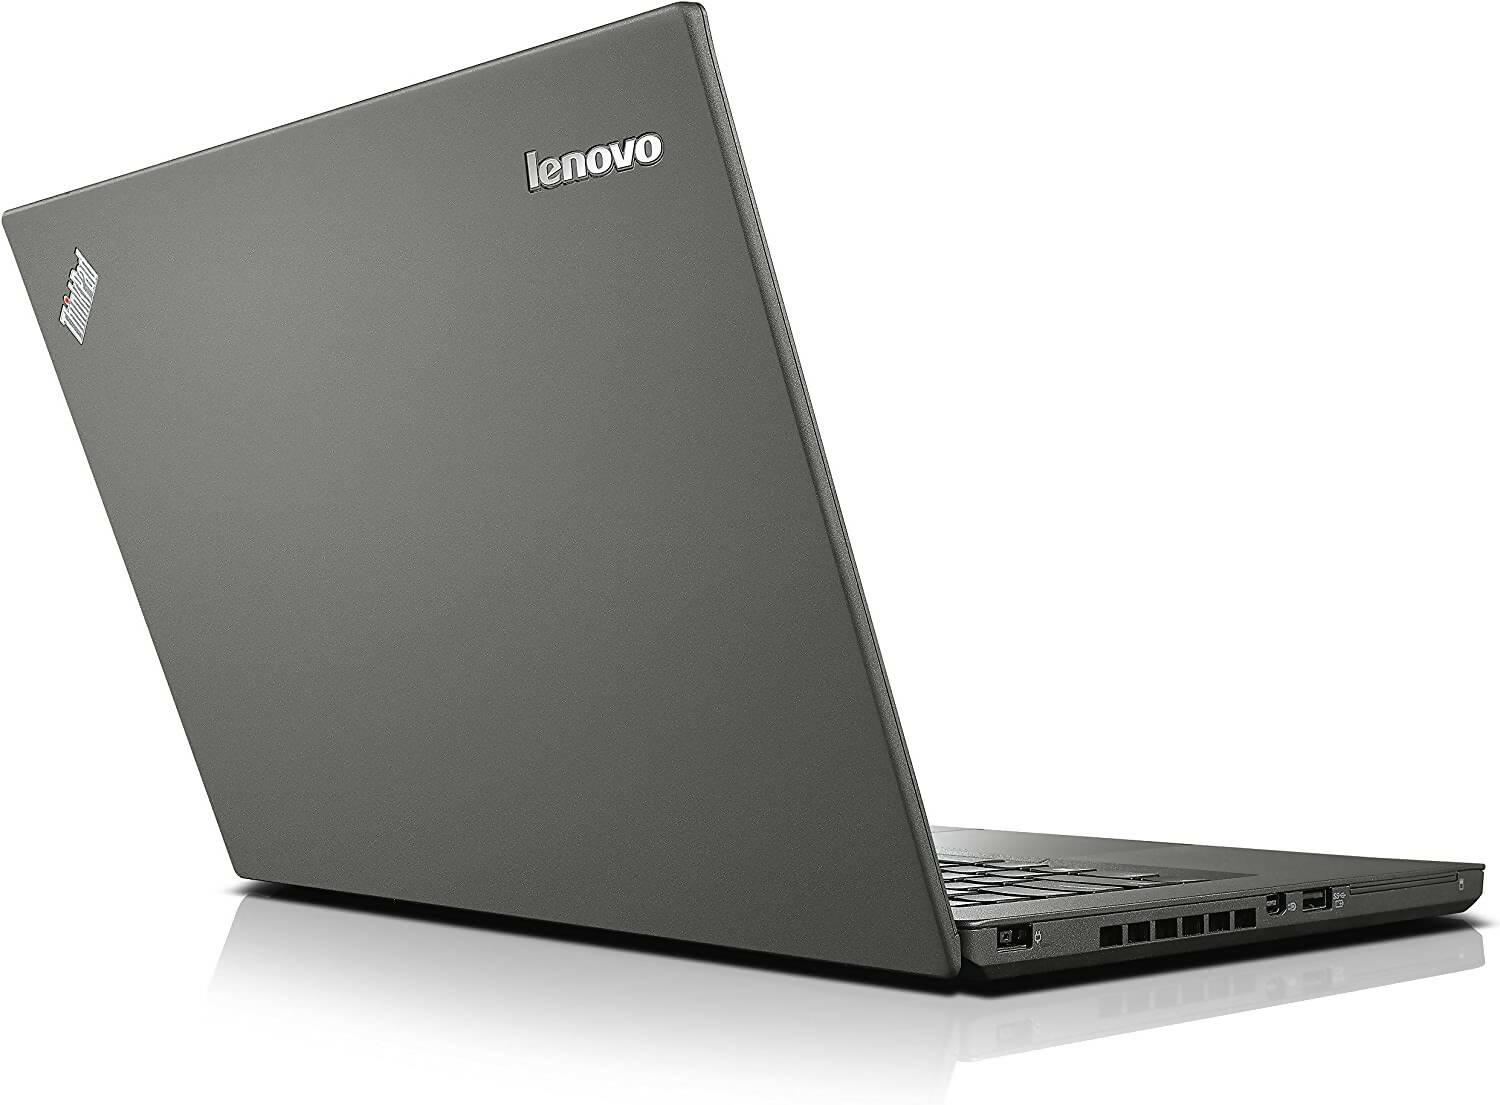 Lenovo Thinkpad T440 20B6008EUS (14" HD, i5-4200U 1.6GHz, 4GB RAM, 500GB 7200rpm Hard Drive, Windows 7 Pro 64) - ValueBox